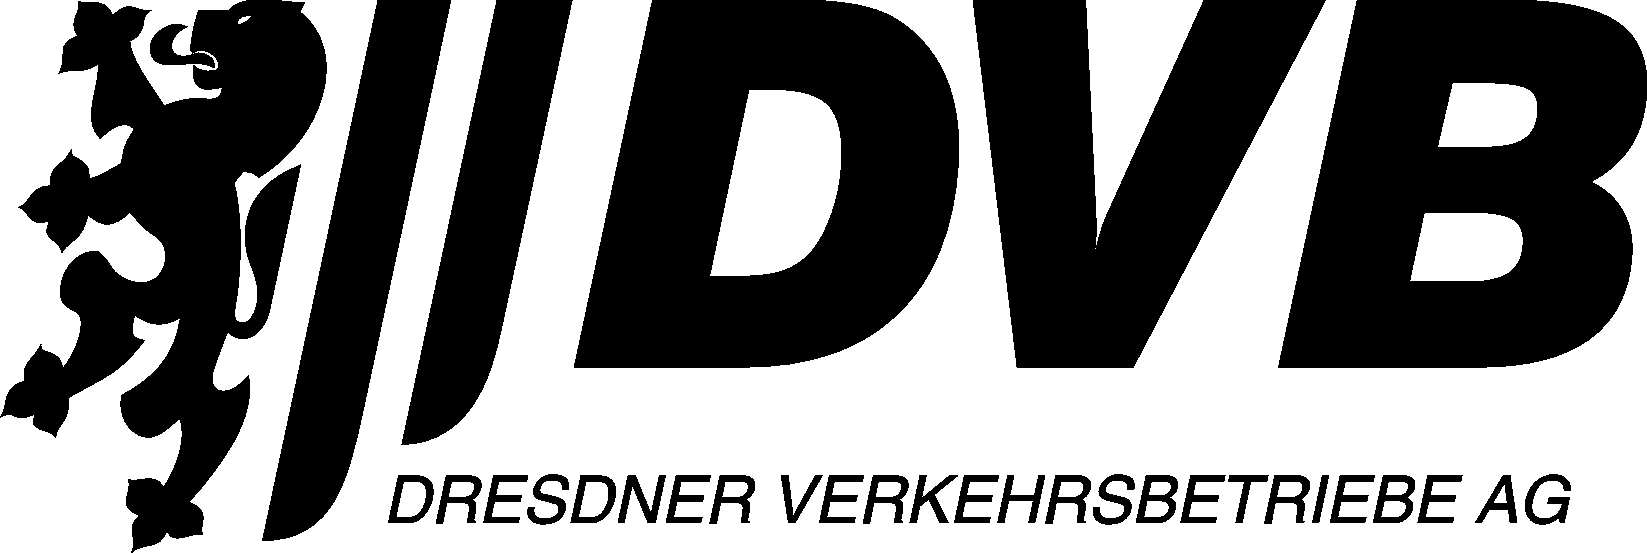 Dresdner Verkehrsbetriebe AG - Referenz aeroLAN IBH IT-Service GmbH